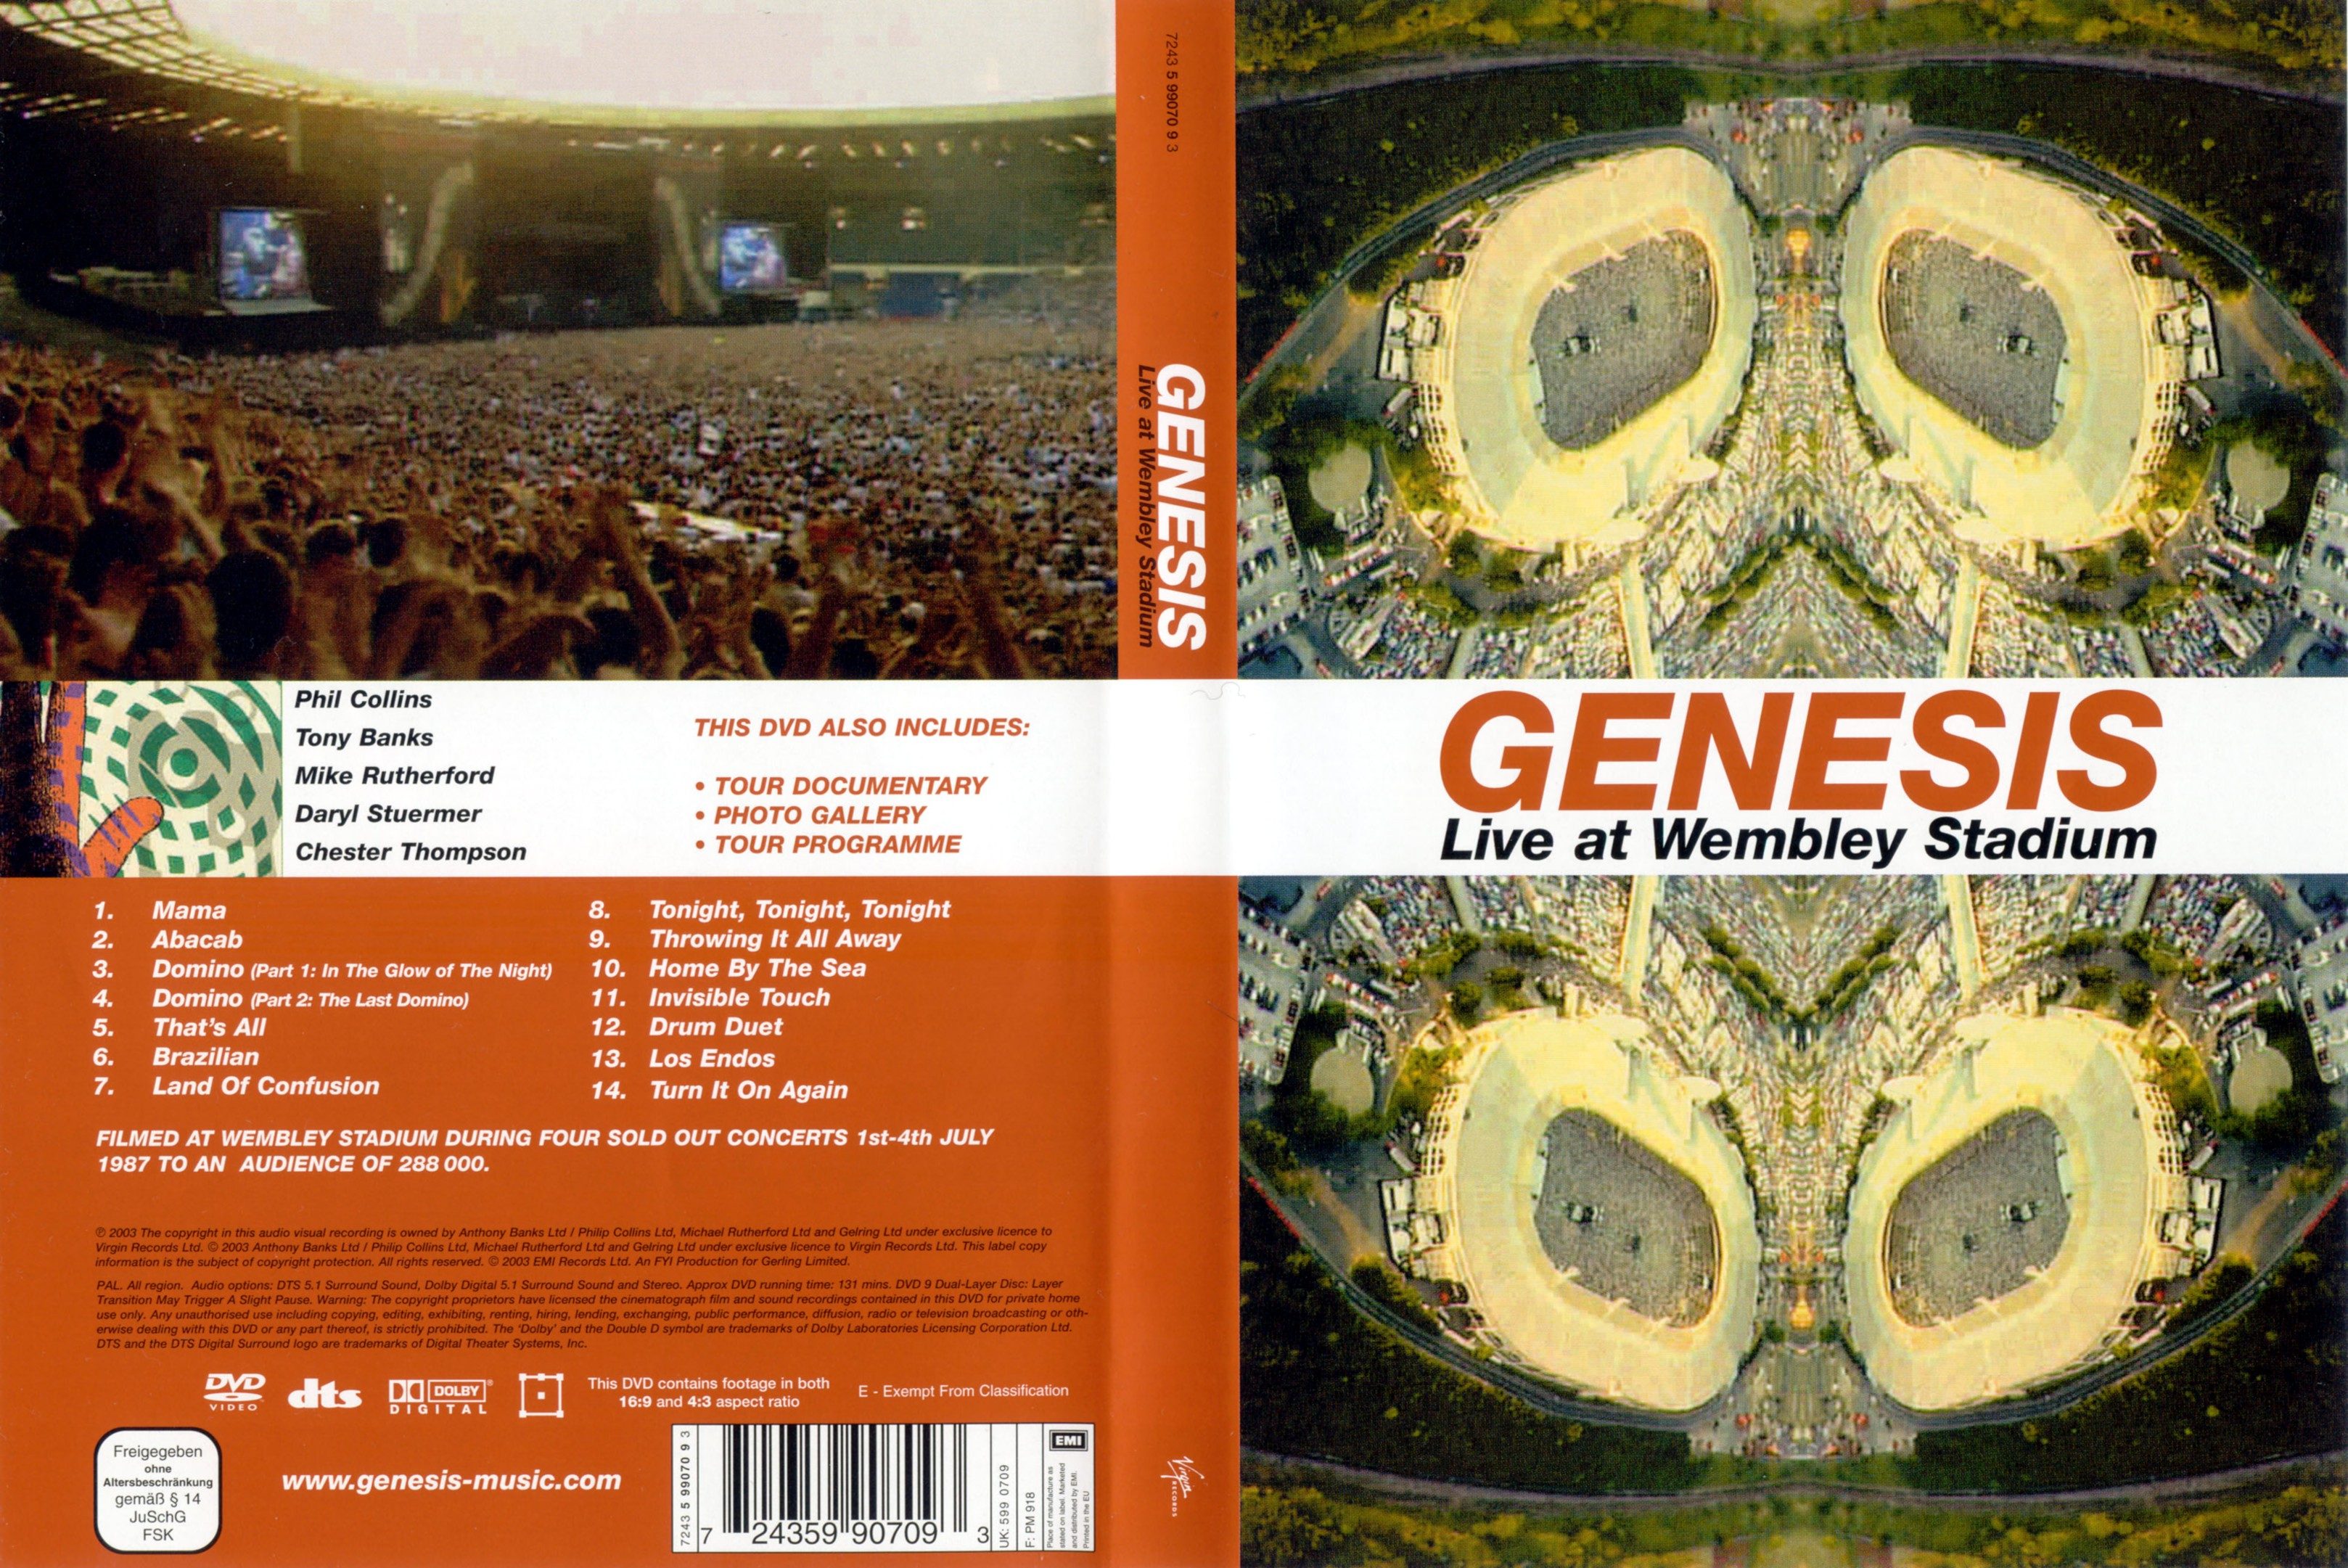 Jaquette DVD Genesis Live at Wembley